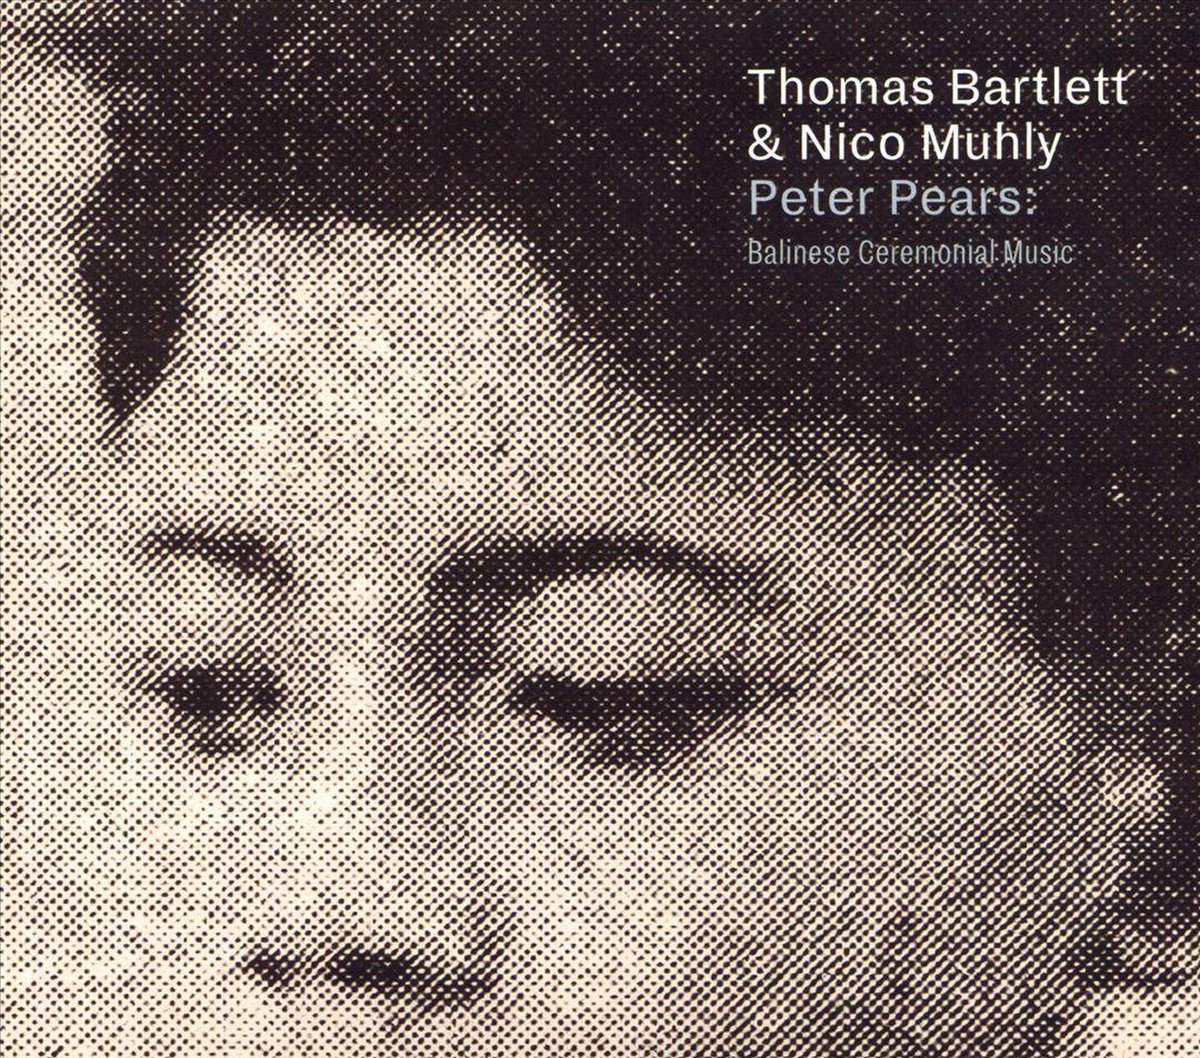 Peter Pears: Balinese Ceremonial Music | Thomas Bartlett, Nico Muhly